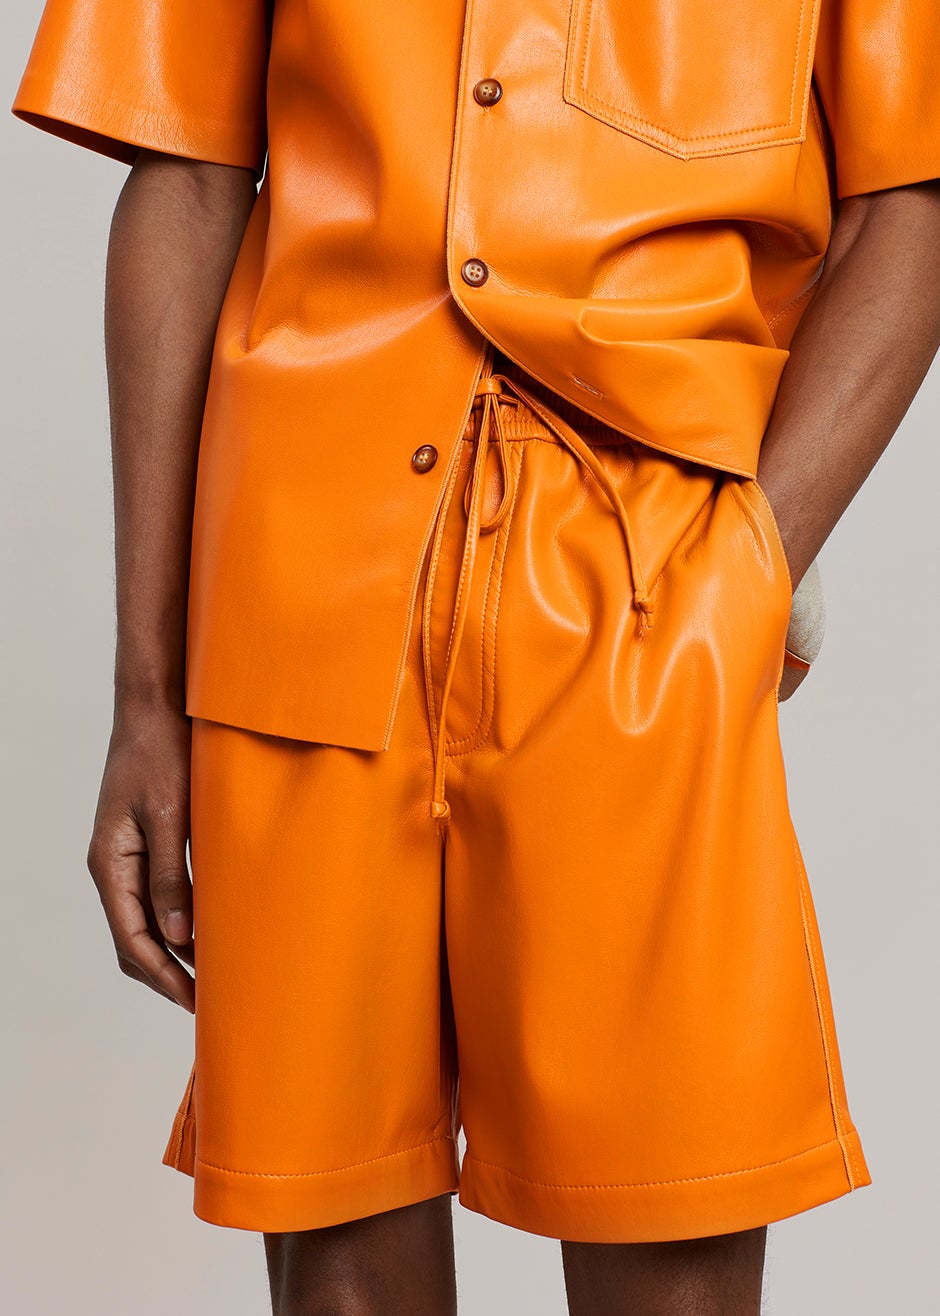 Nanushka Doxxi Vegan Leather Shorts - Orange - 2